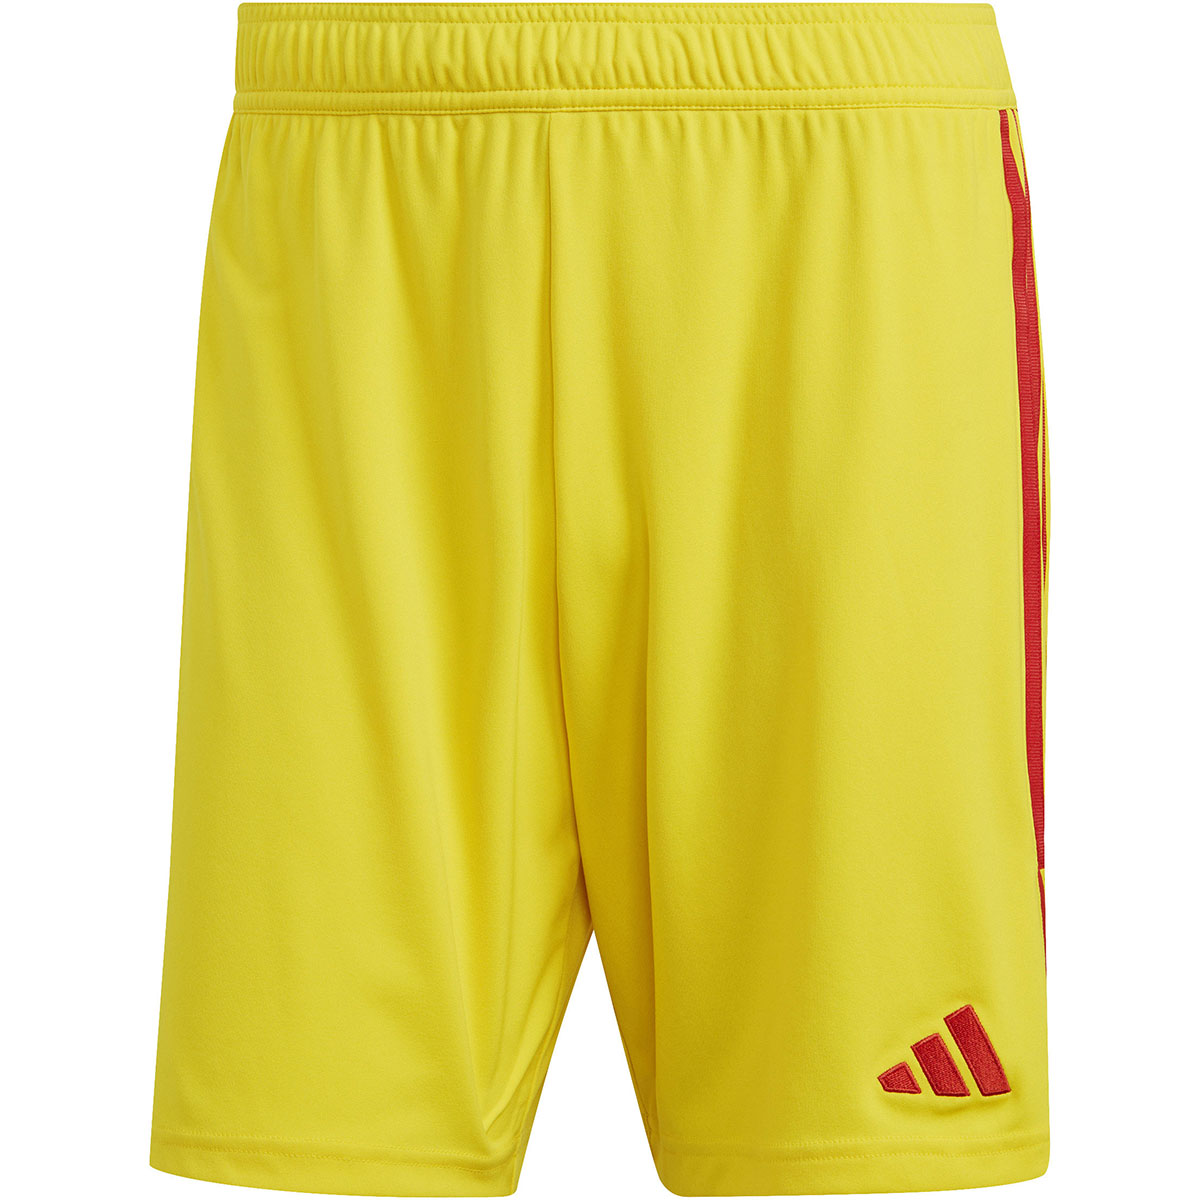 Adidas Herren Shorts Tiro 23 gelb-rot